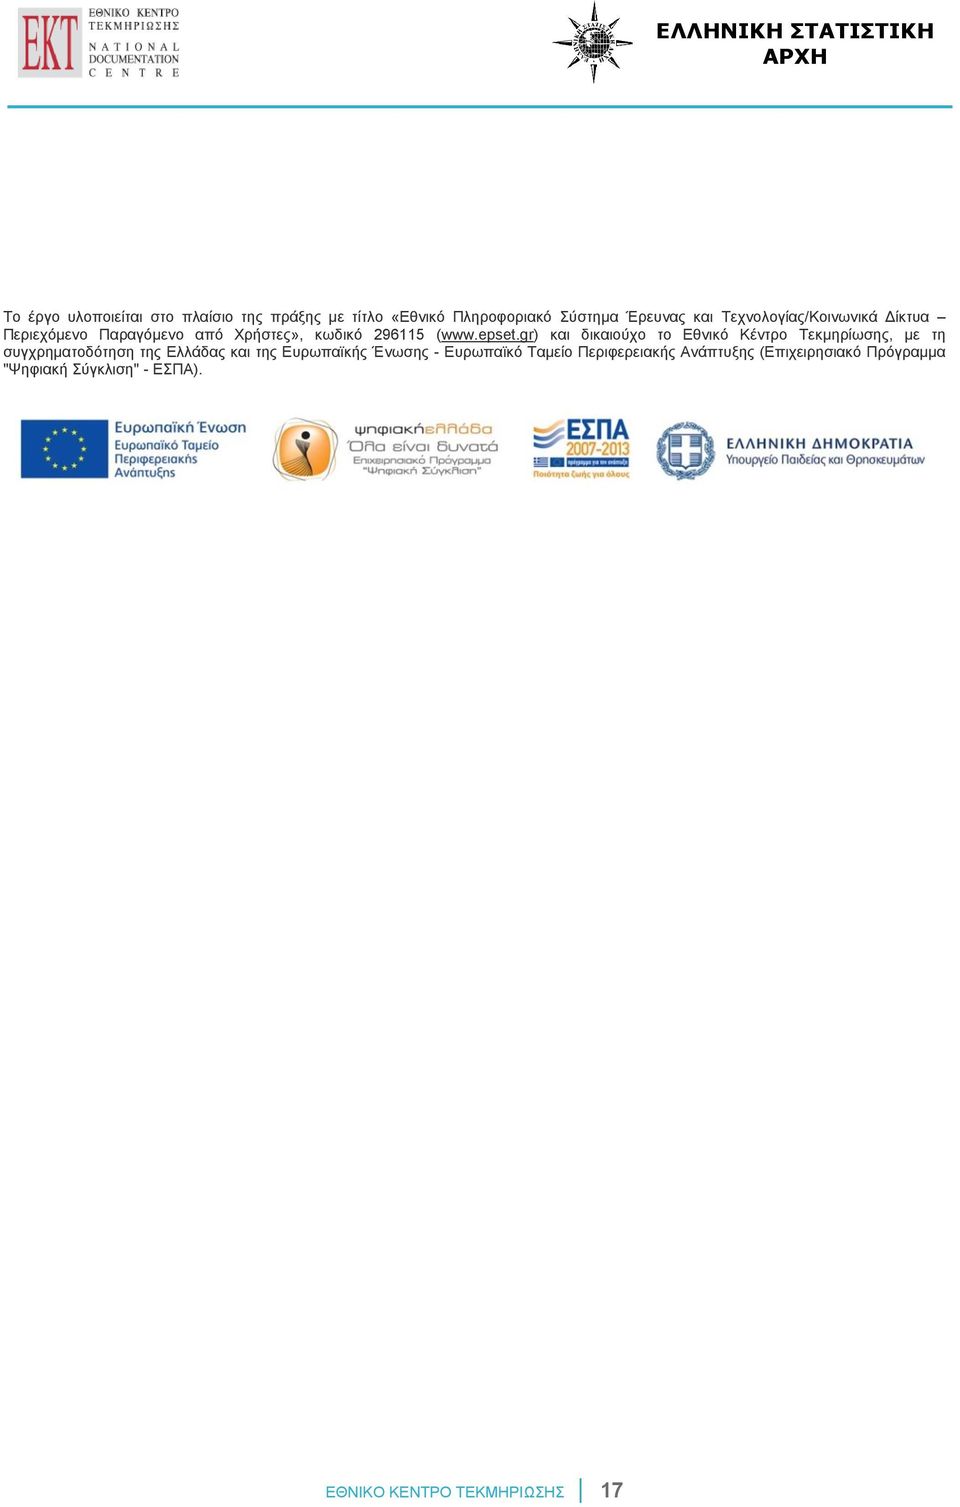 gr) και δικαιούχο το Εθνικό Κέντρο Τεκμηρίωσης, με τη συγχρηματοδότηση της Ελλάδας και της Ευρωπαϊκής